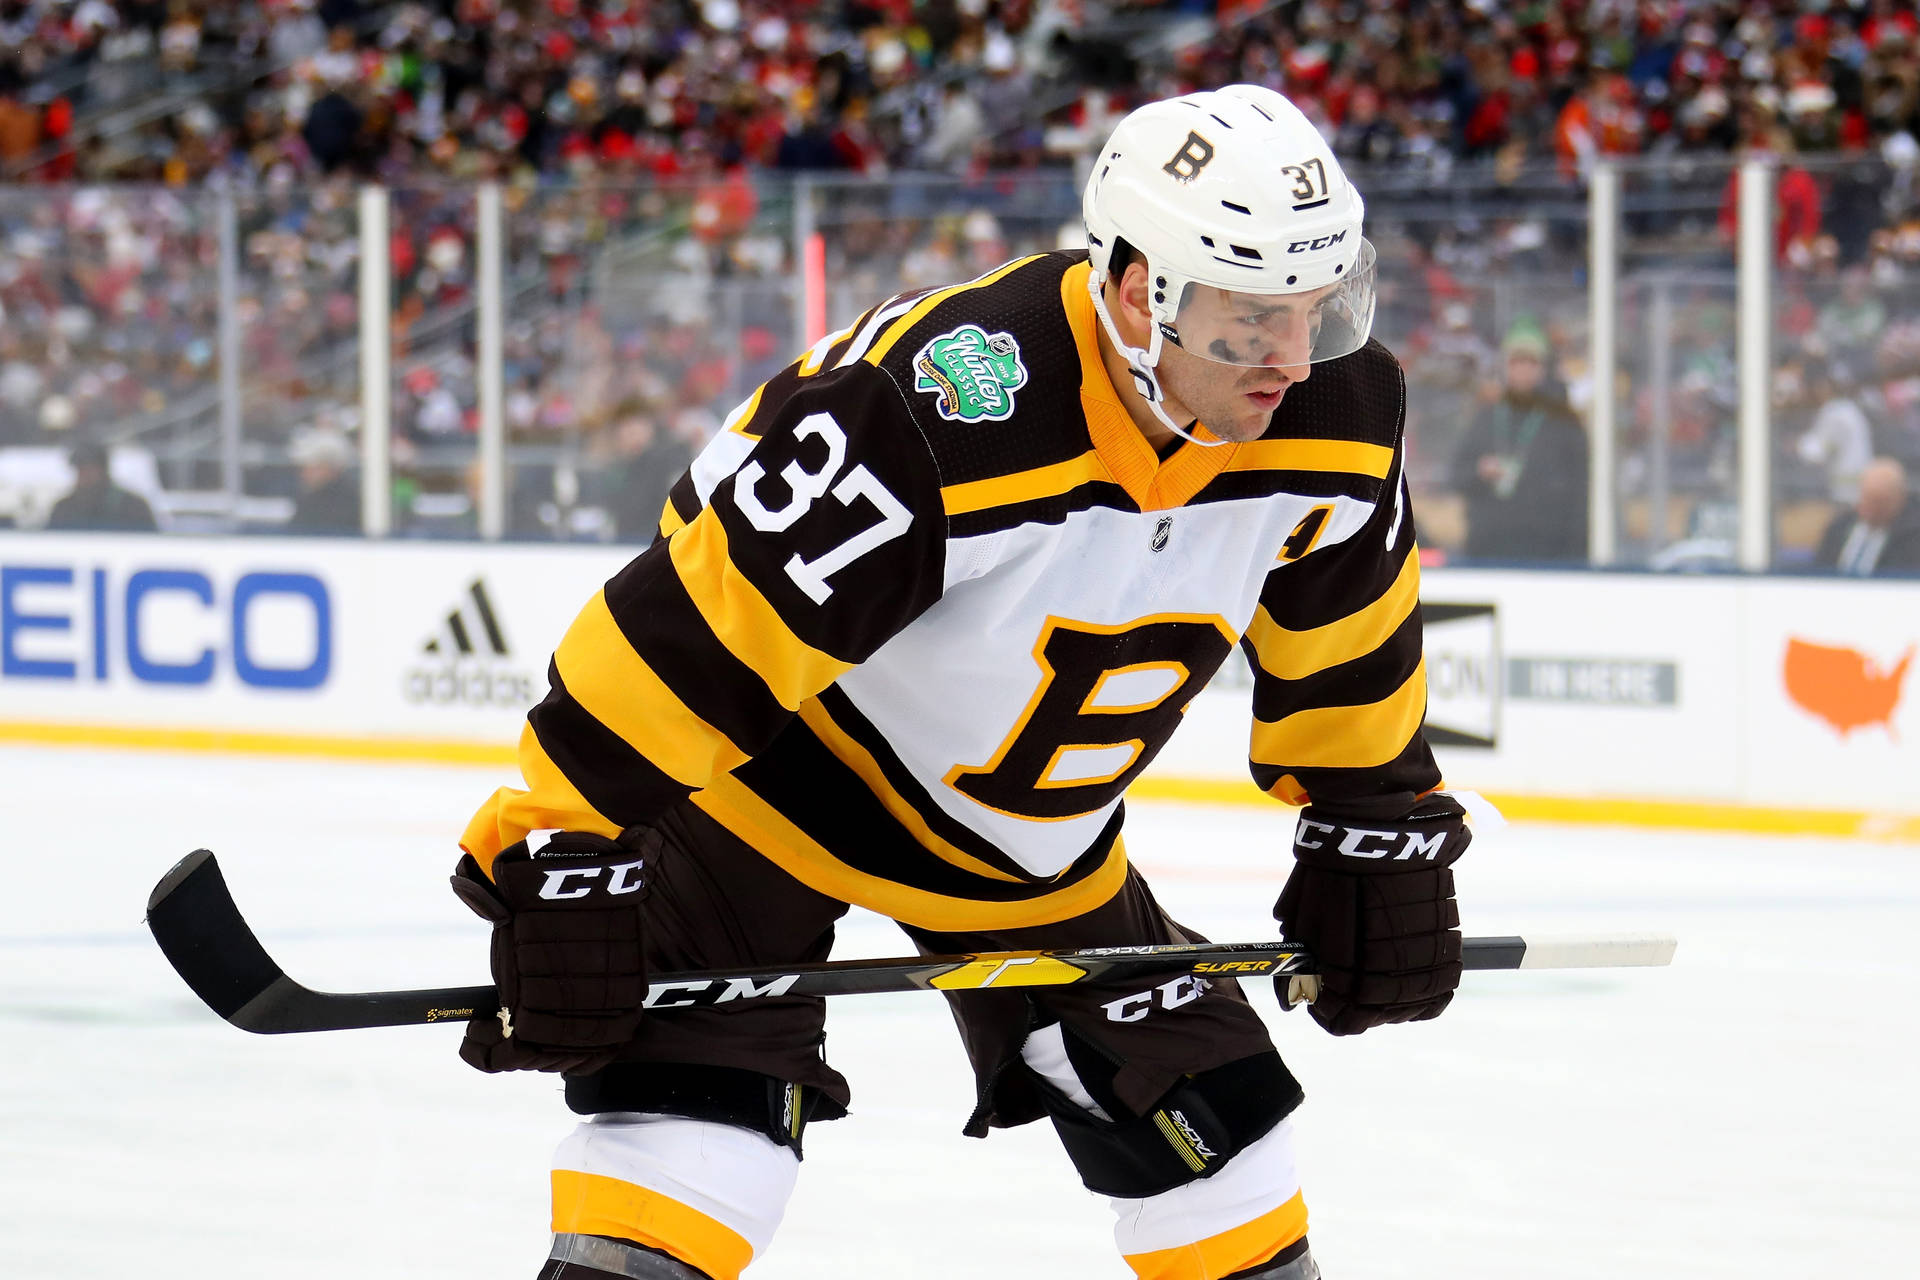 Patrice Bergeron, Boston Bruins, NHL, Canadian hockey player, portrait,  yellow stone background, HD wallpaper